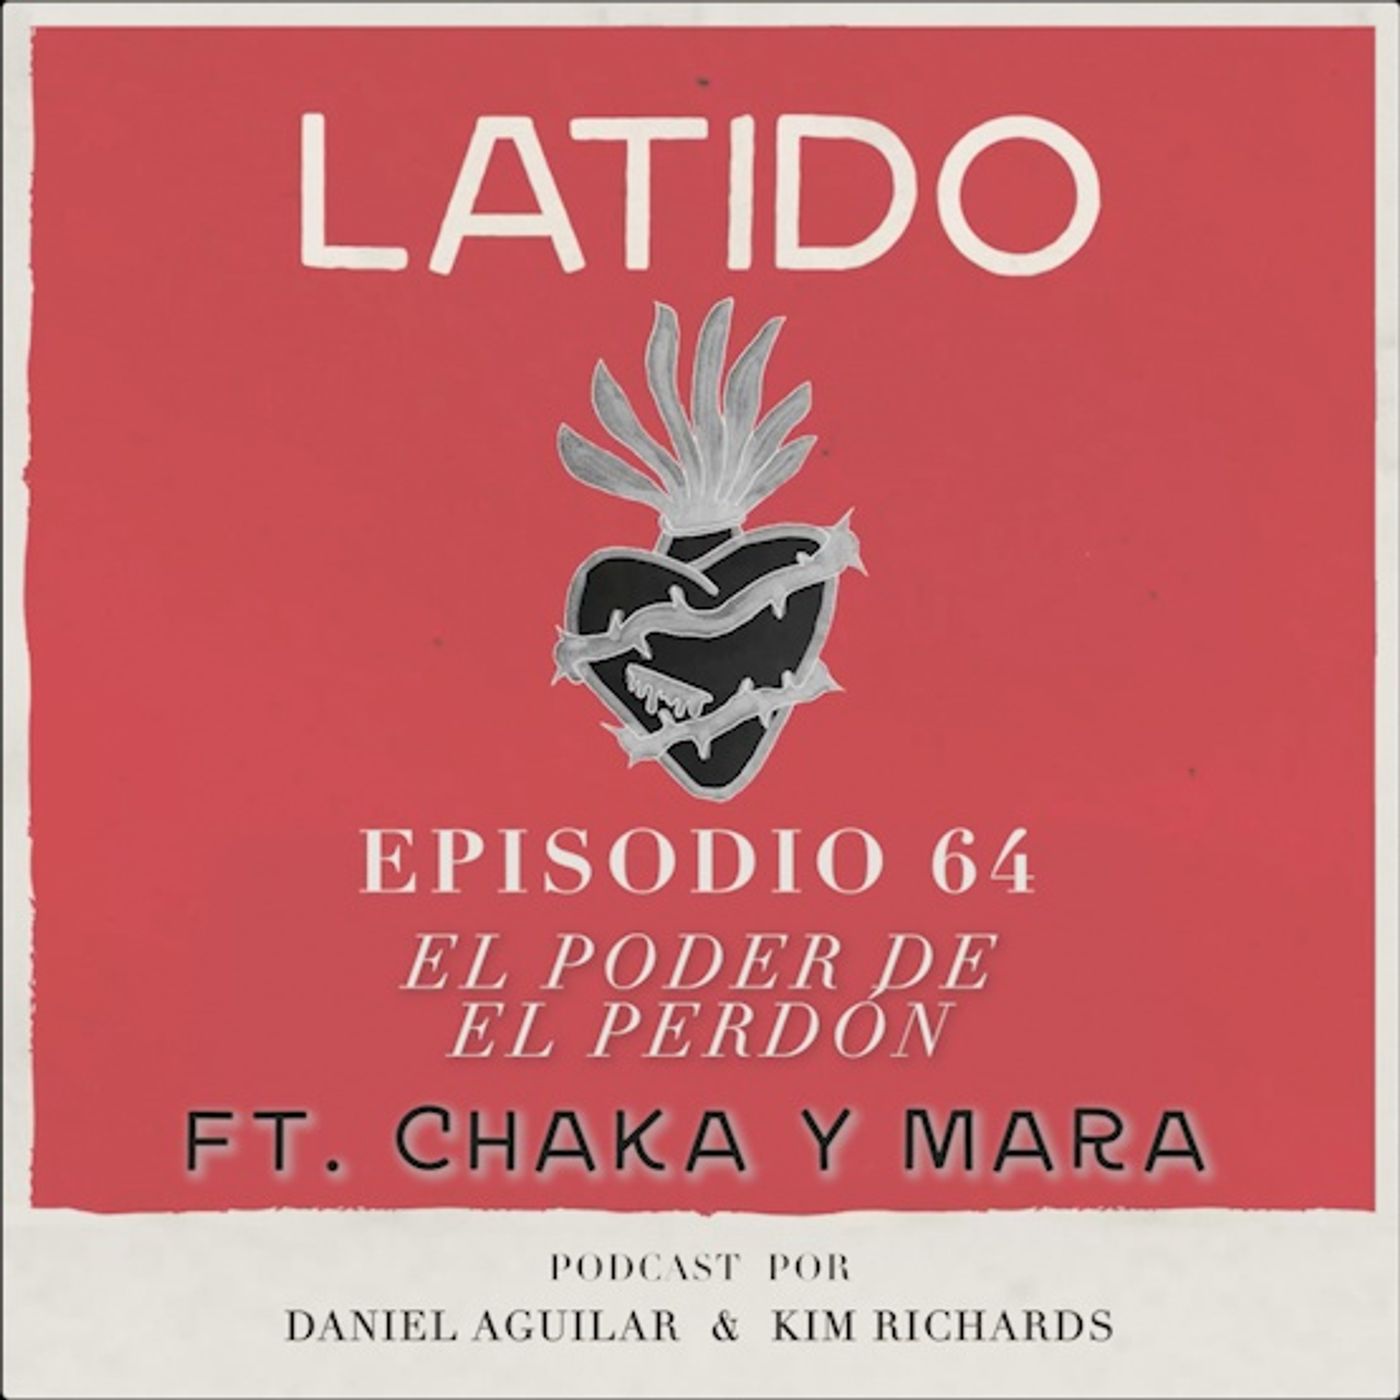 Latido Podcast - Episodio 64 - El Poder del Perdón ft. Chaka y Mara Rodríguez